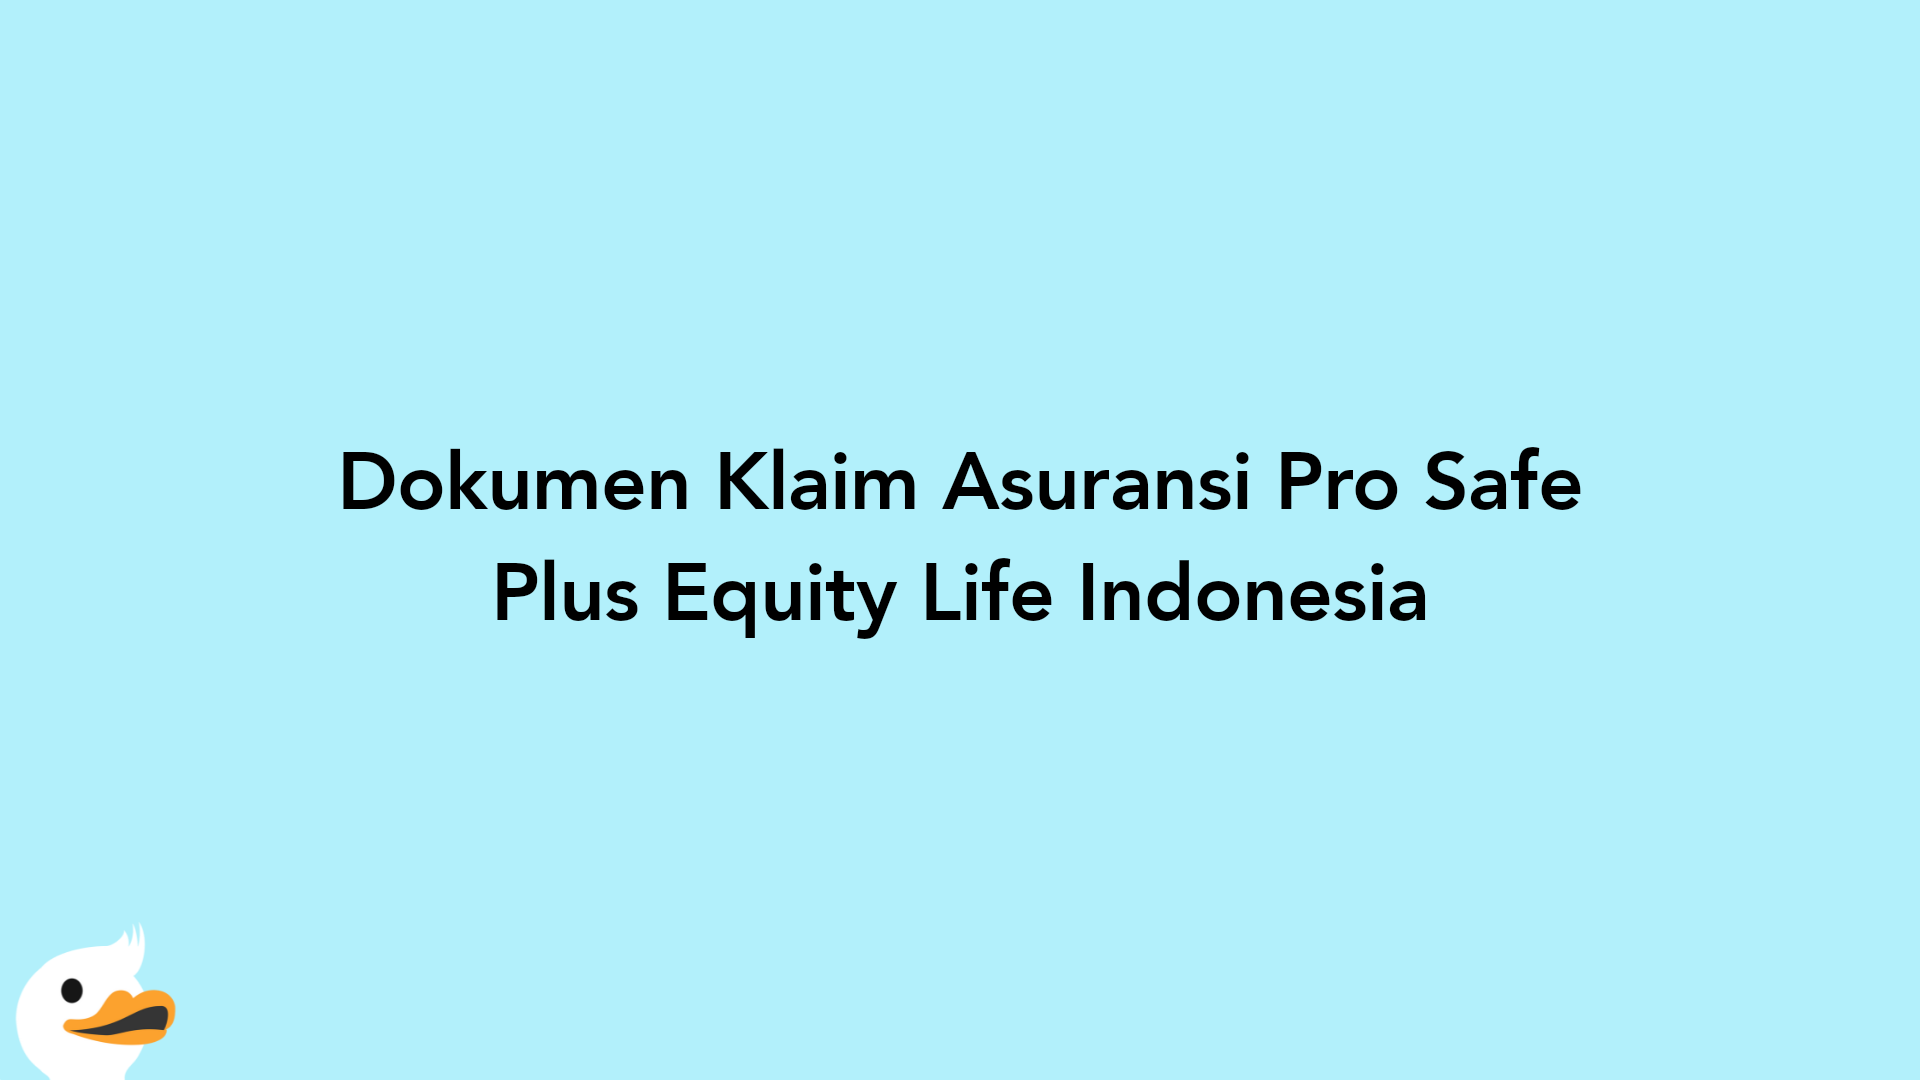 Dokumen Klaim Asuransi Pro Safe Plus Equity Life Indonesia